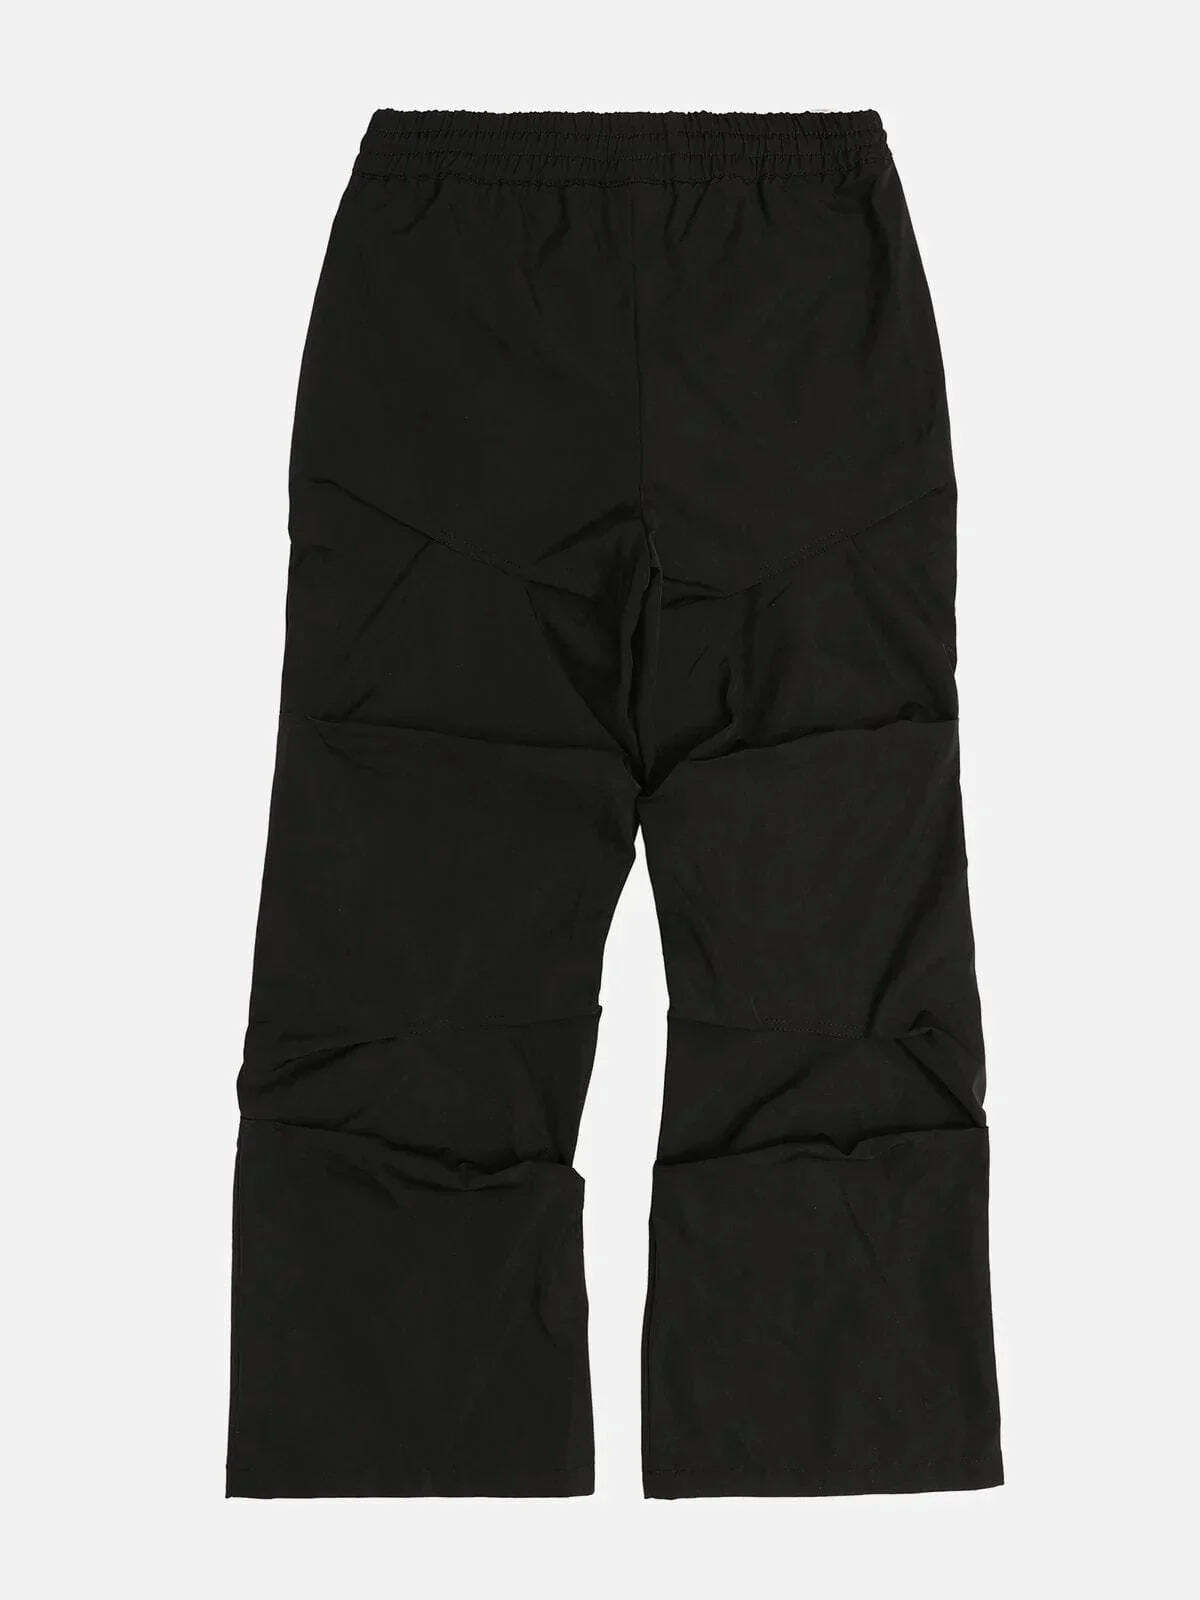 layered pleated pants edgy & versatile streetwear 2269